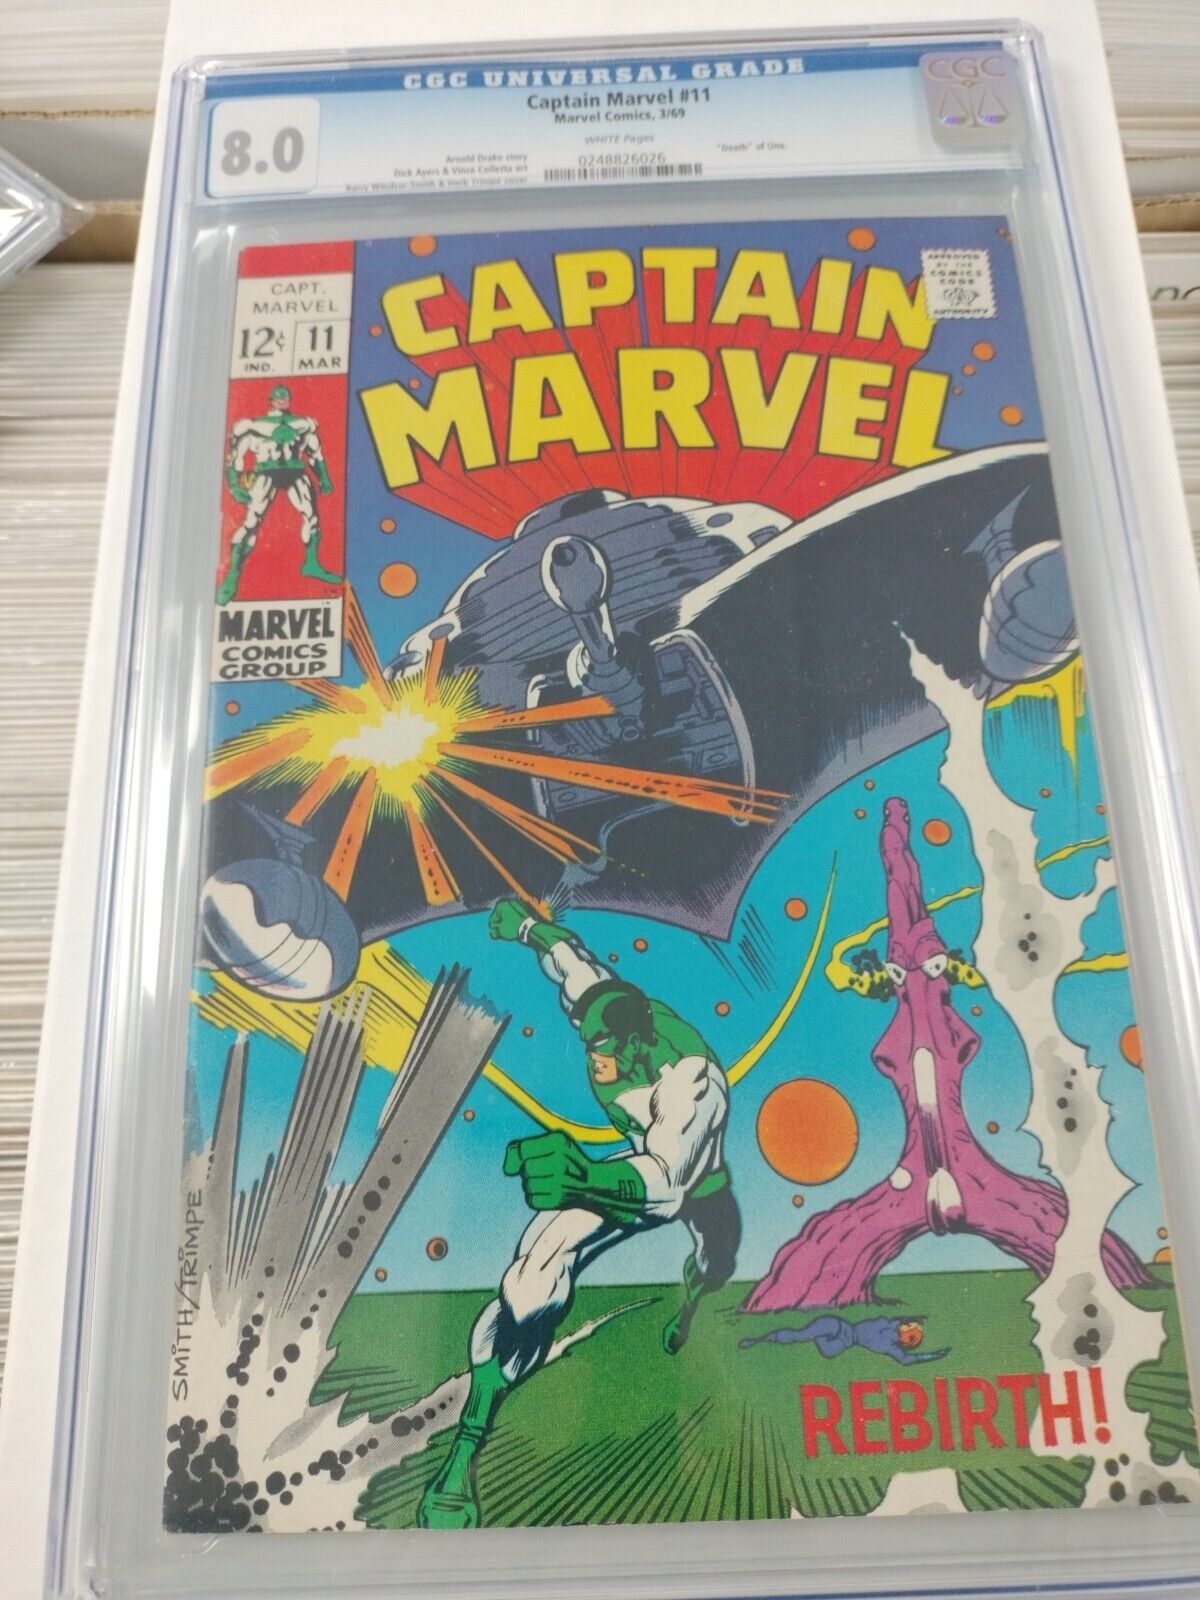 Captain Marvel #11 (Marvel 1969) CGC Certified 8.0